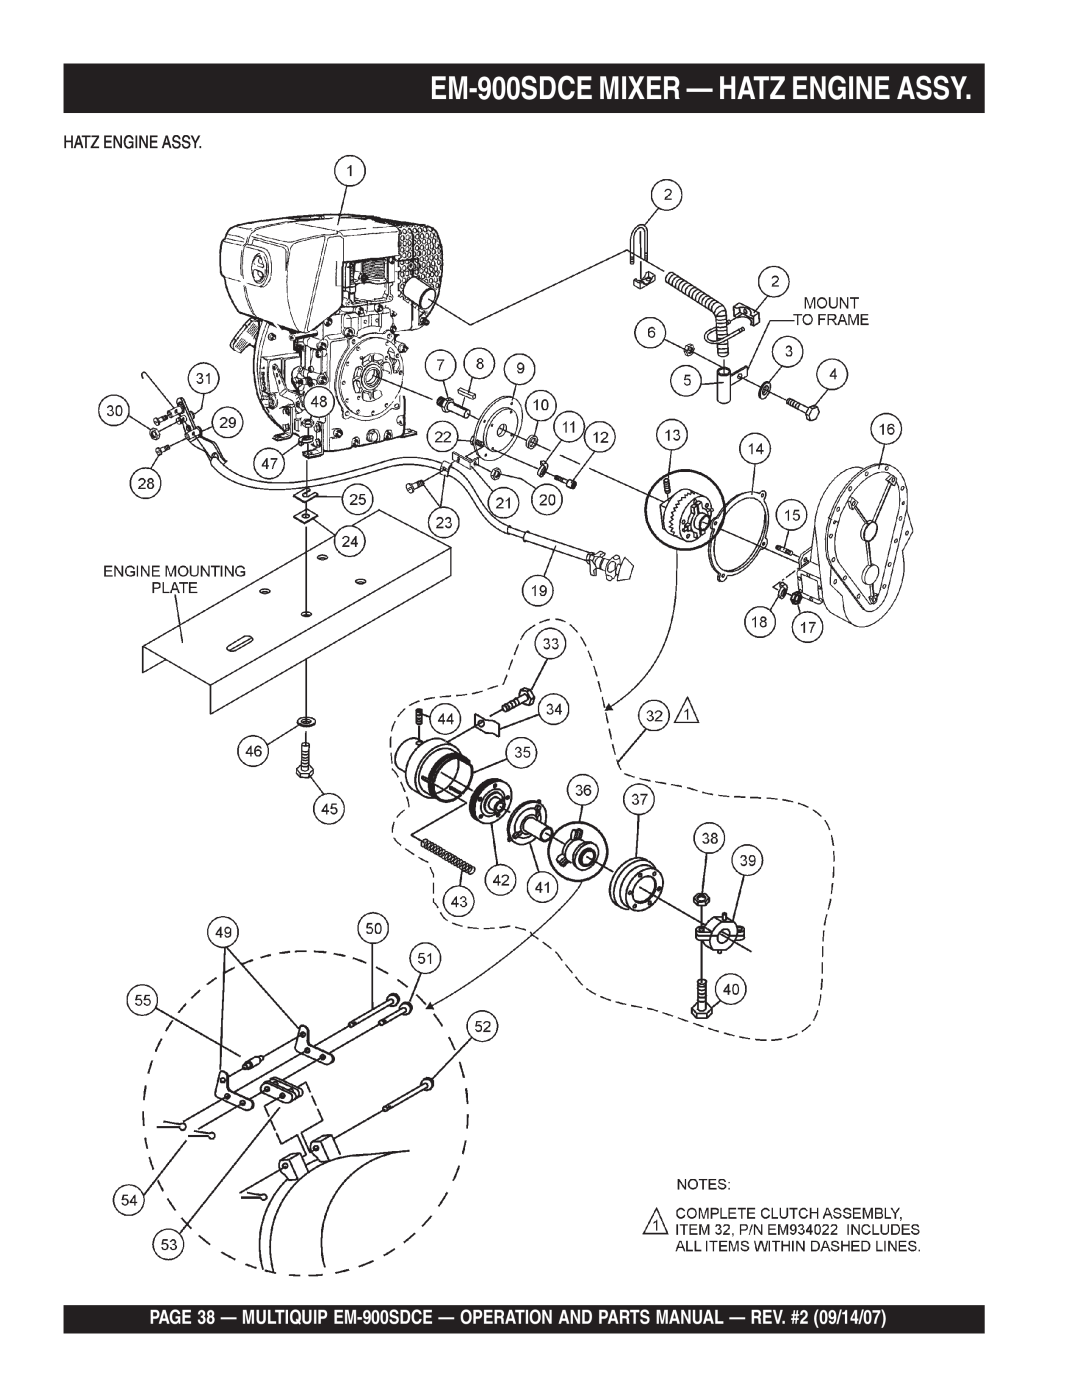 Multiquip manual EM-900SDCEMIXER — HATZ ENGINE ASSY, Hatz Engine Assy 